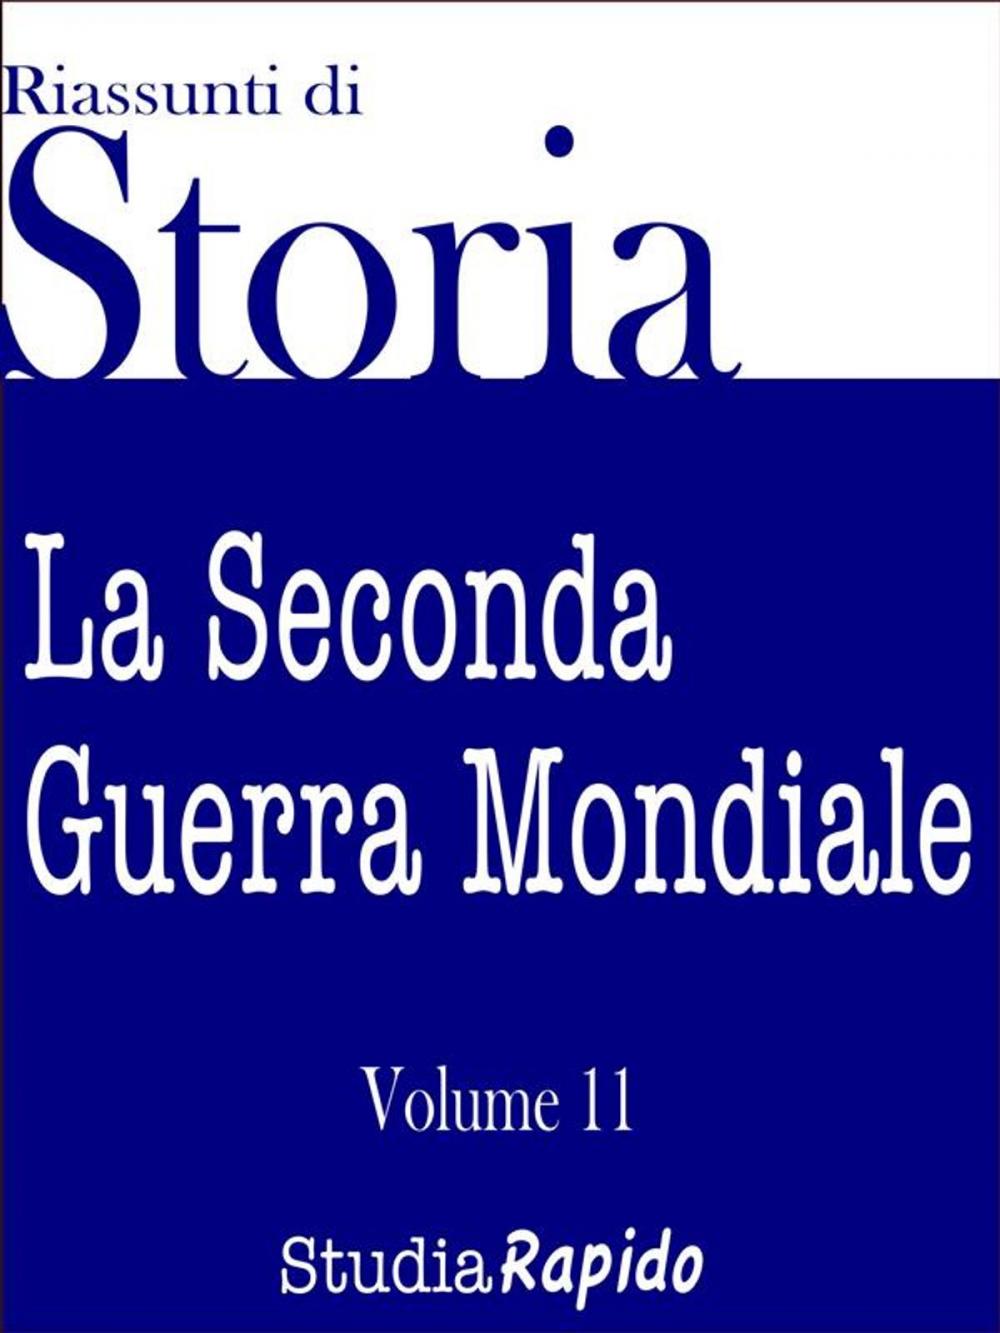 Big bigCover of Riassunti di Storia - Volume 11